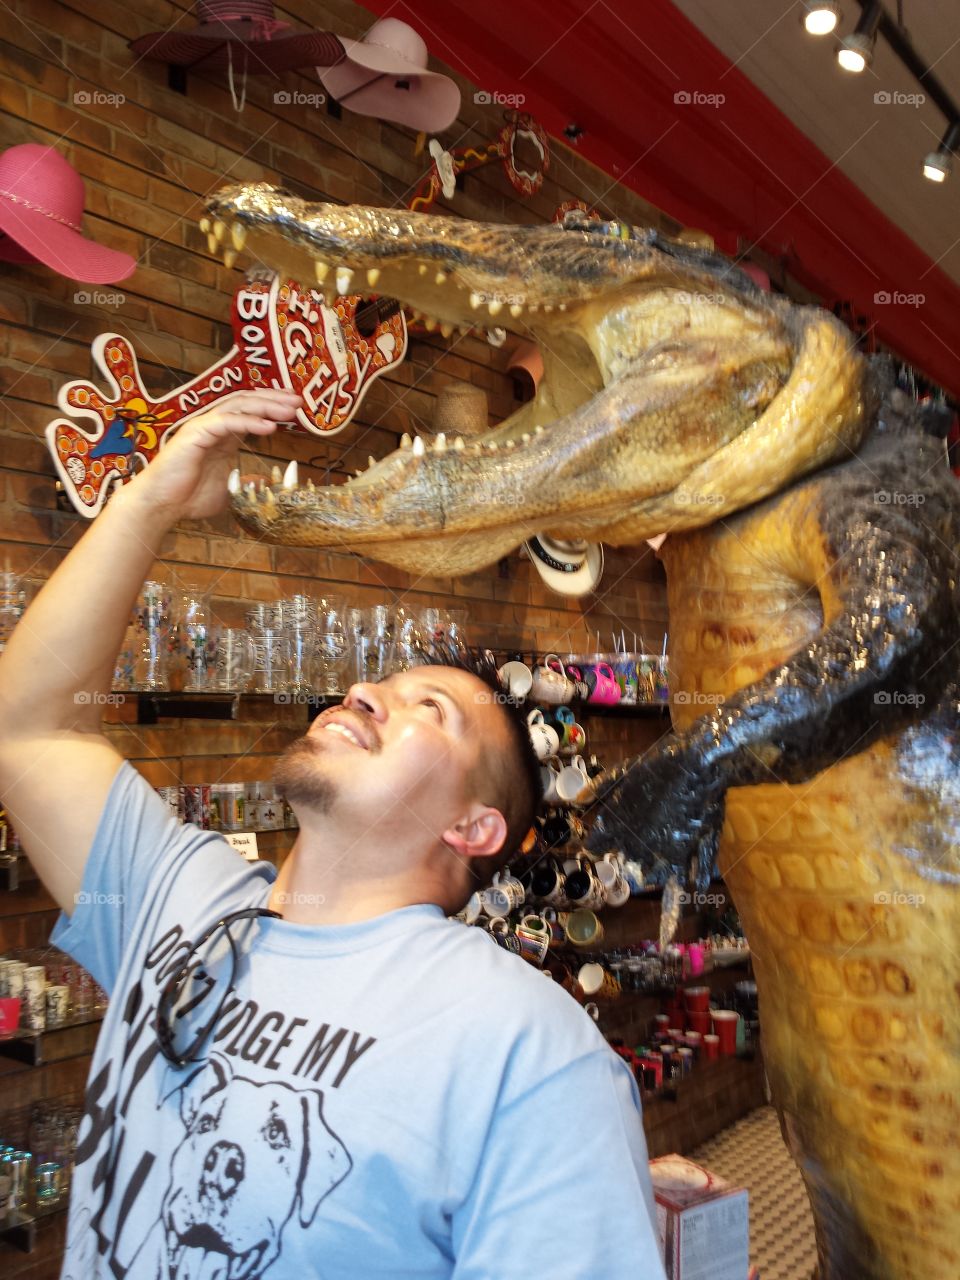 New Orleans stuffed gator in souvenir shop